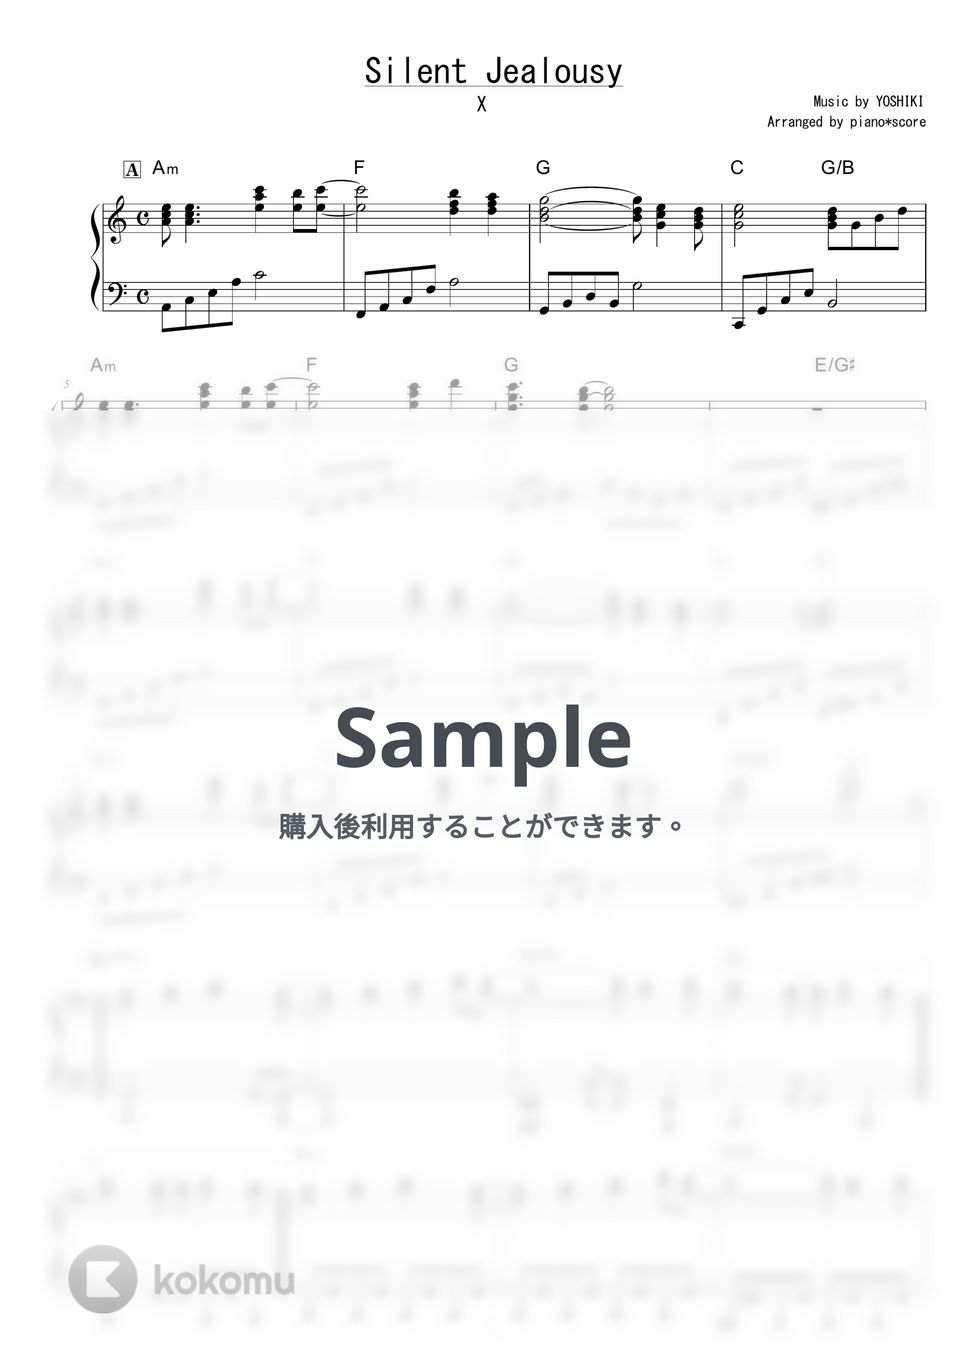 X - Silent Jealousy (X JAPAN) by piano*score